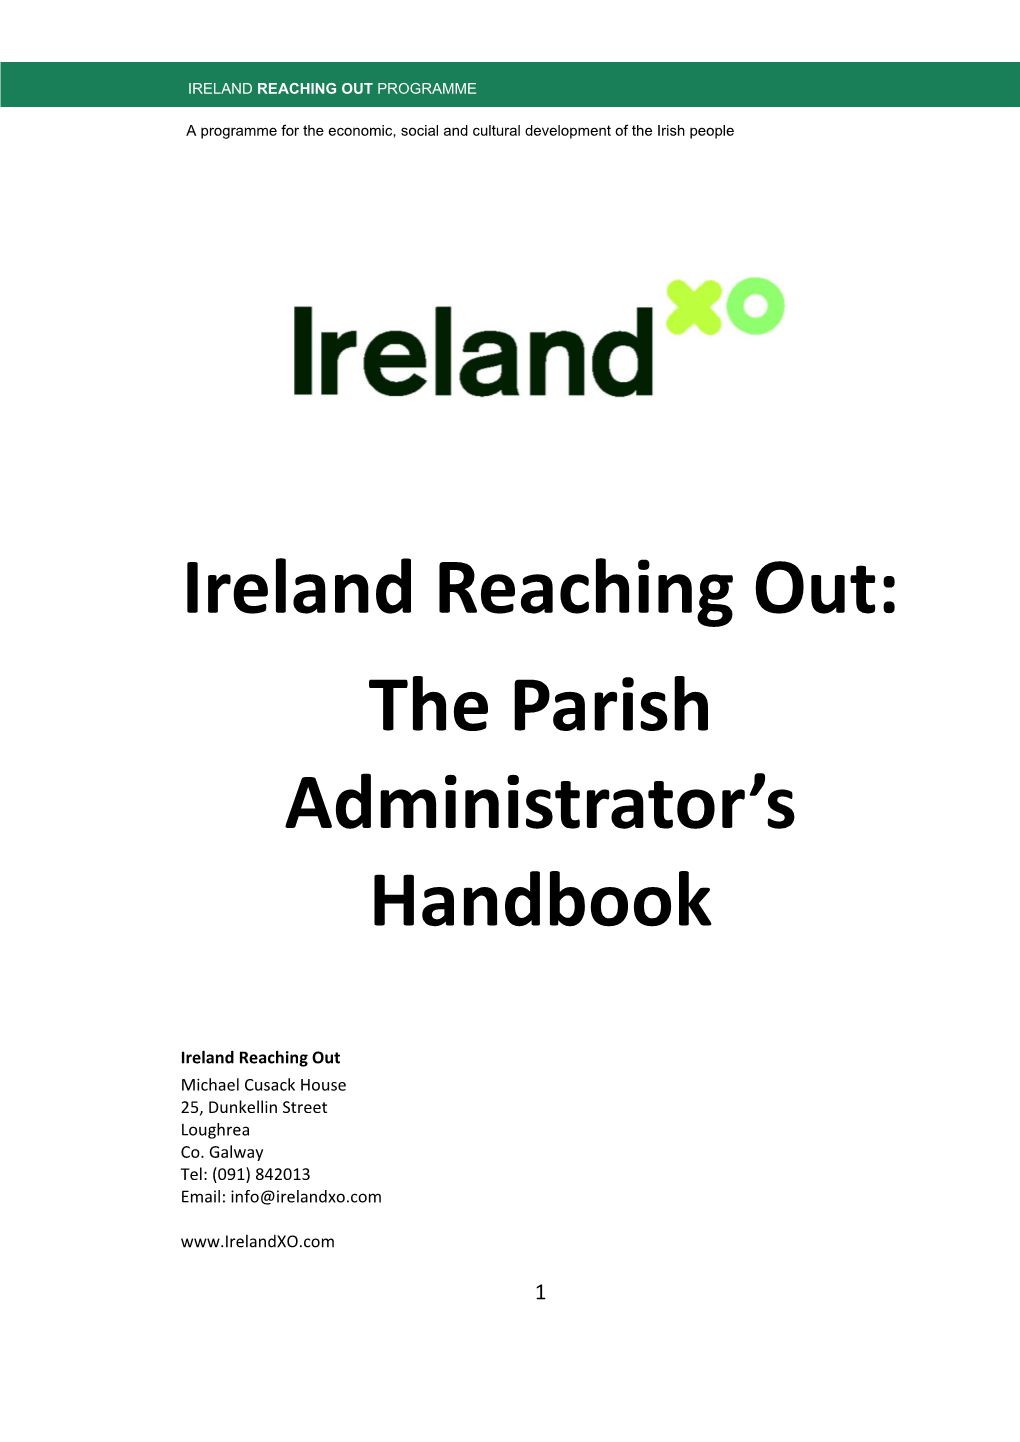 The Parish Administrator's Handbook